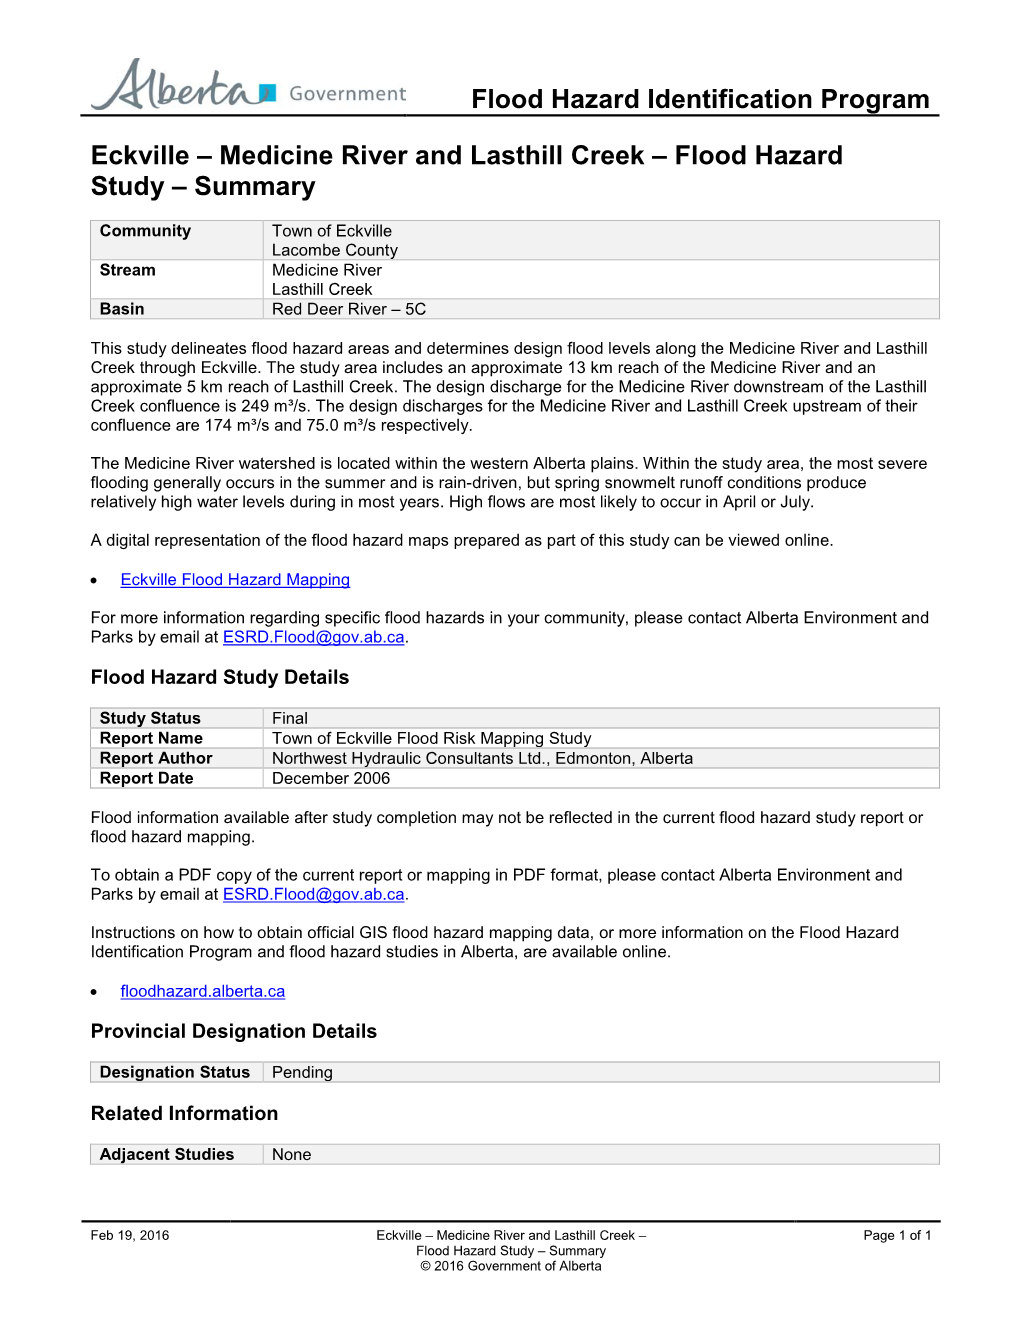 Eckville – Medicine River and Lasthill Creek – Flood Hazard Study – Summary